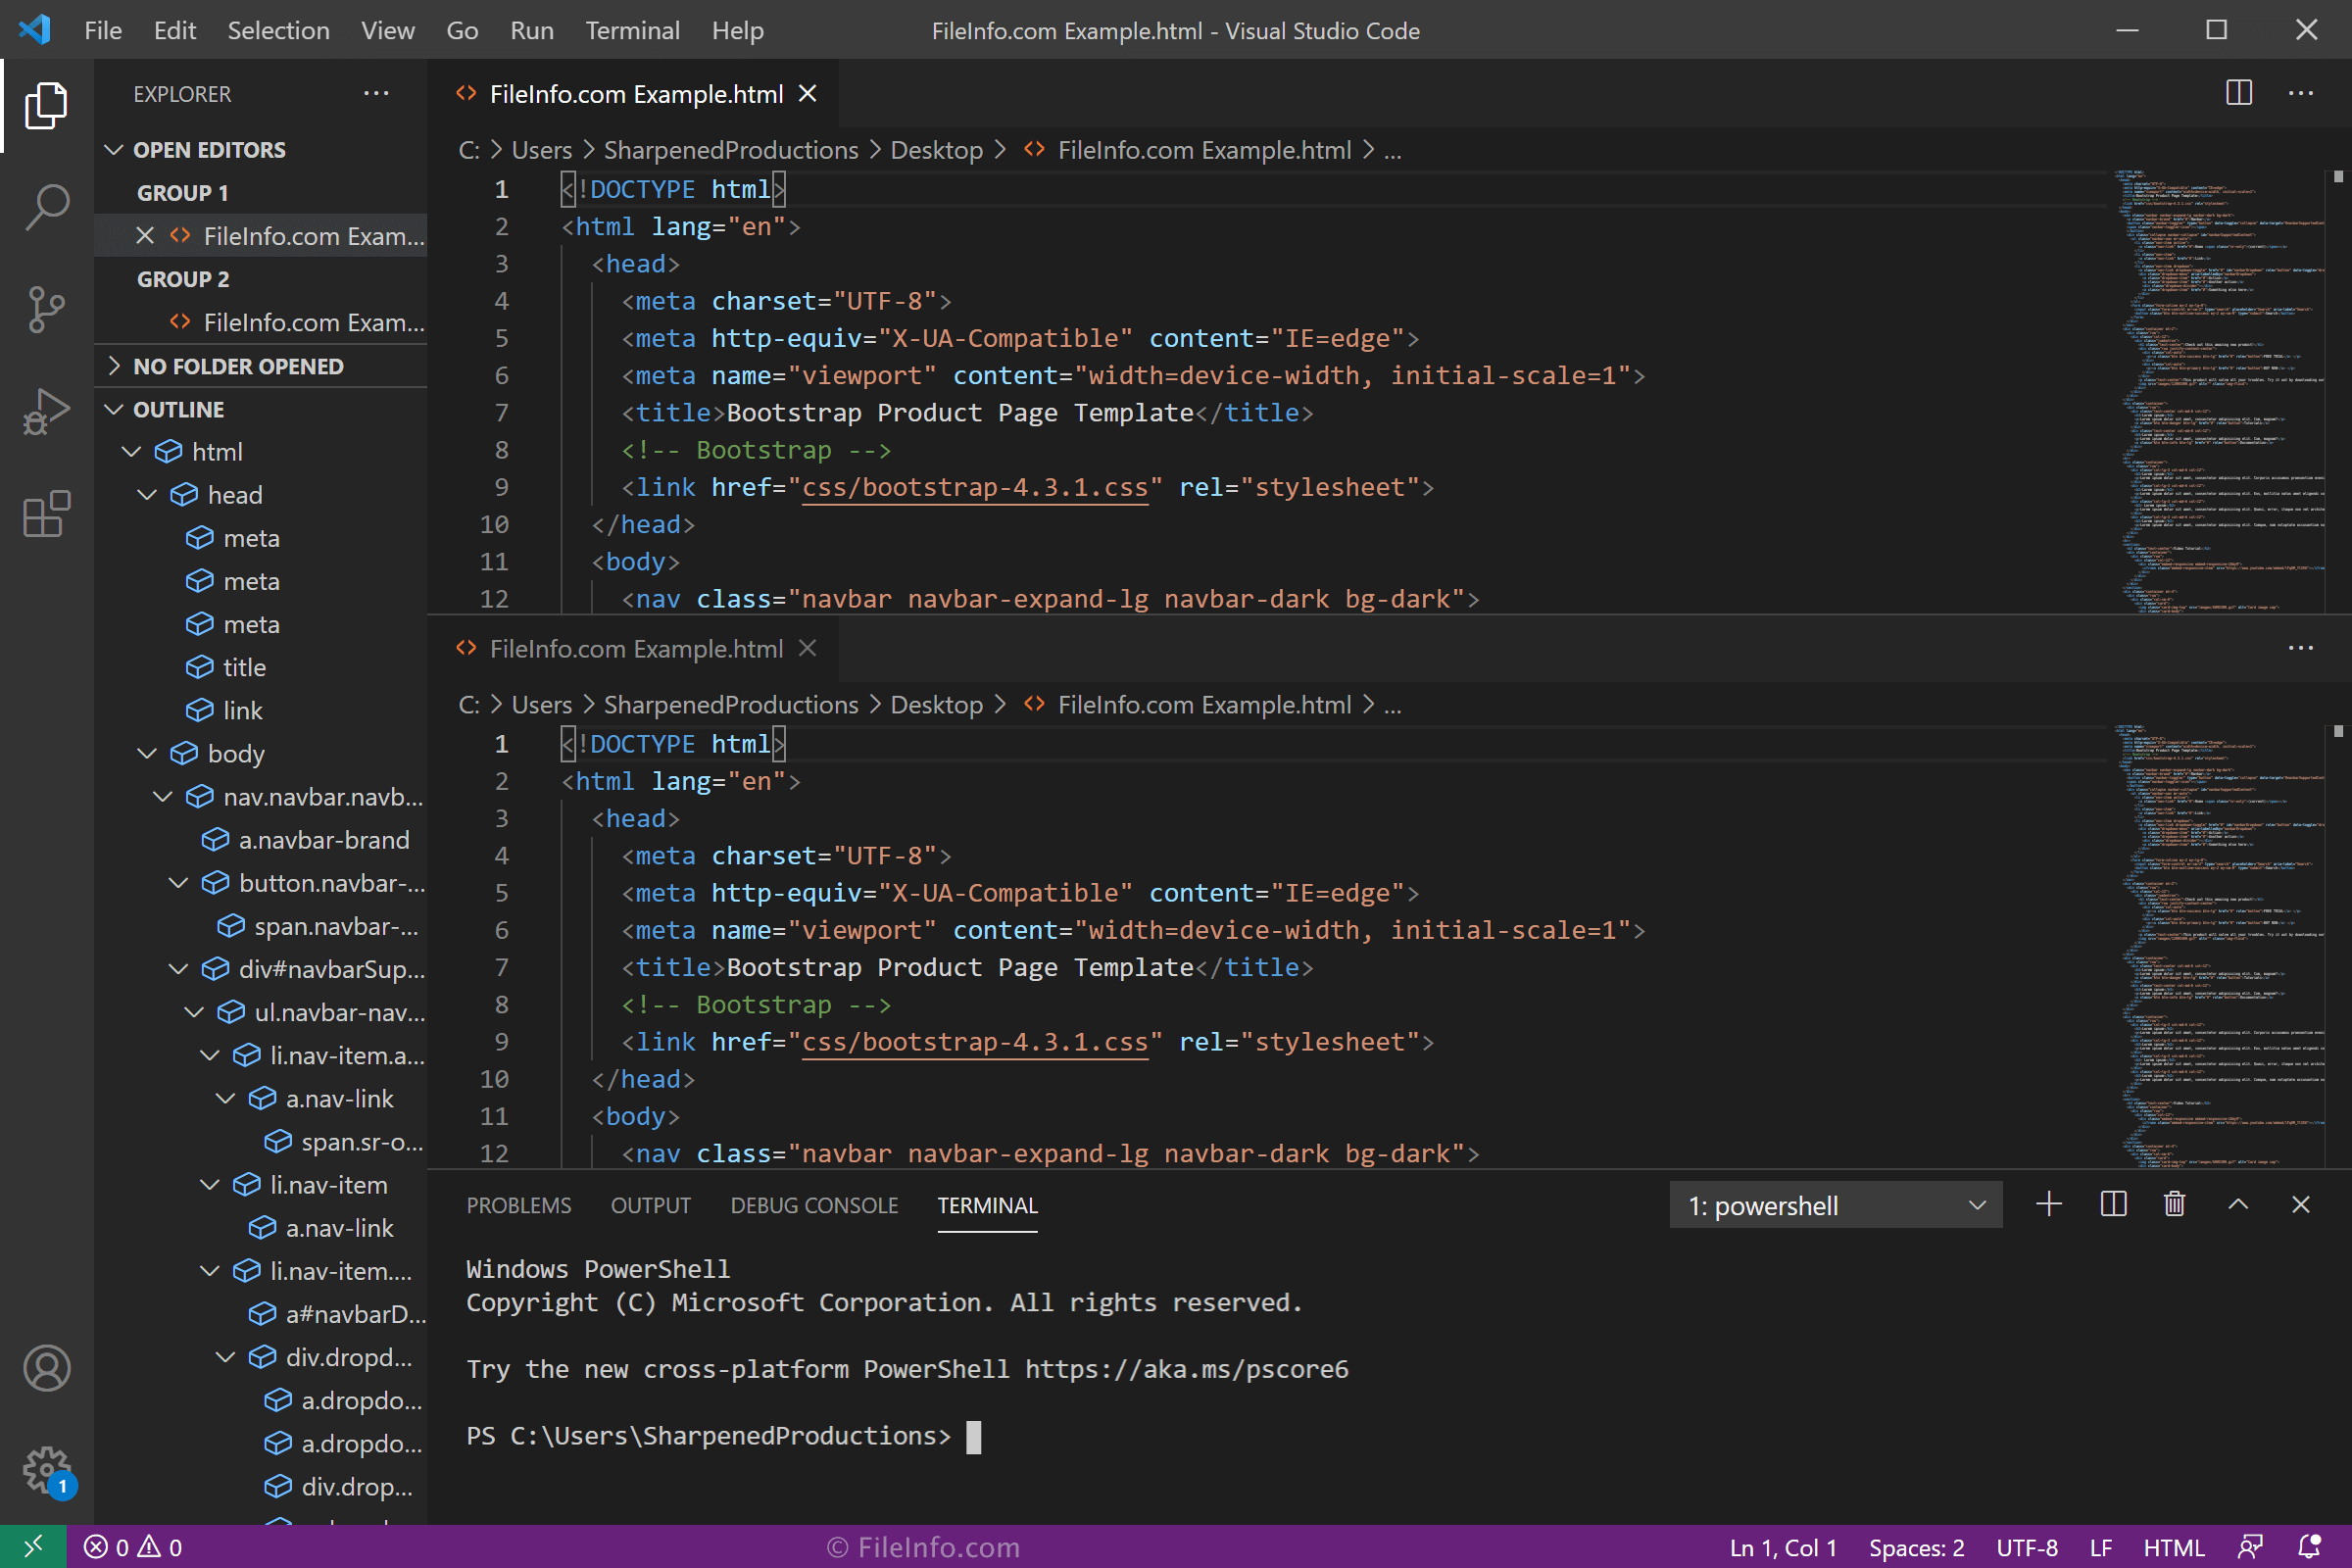 Visual Studio Code vs Visual Studio 